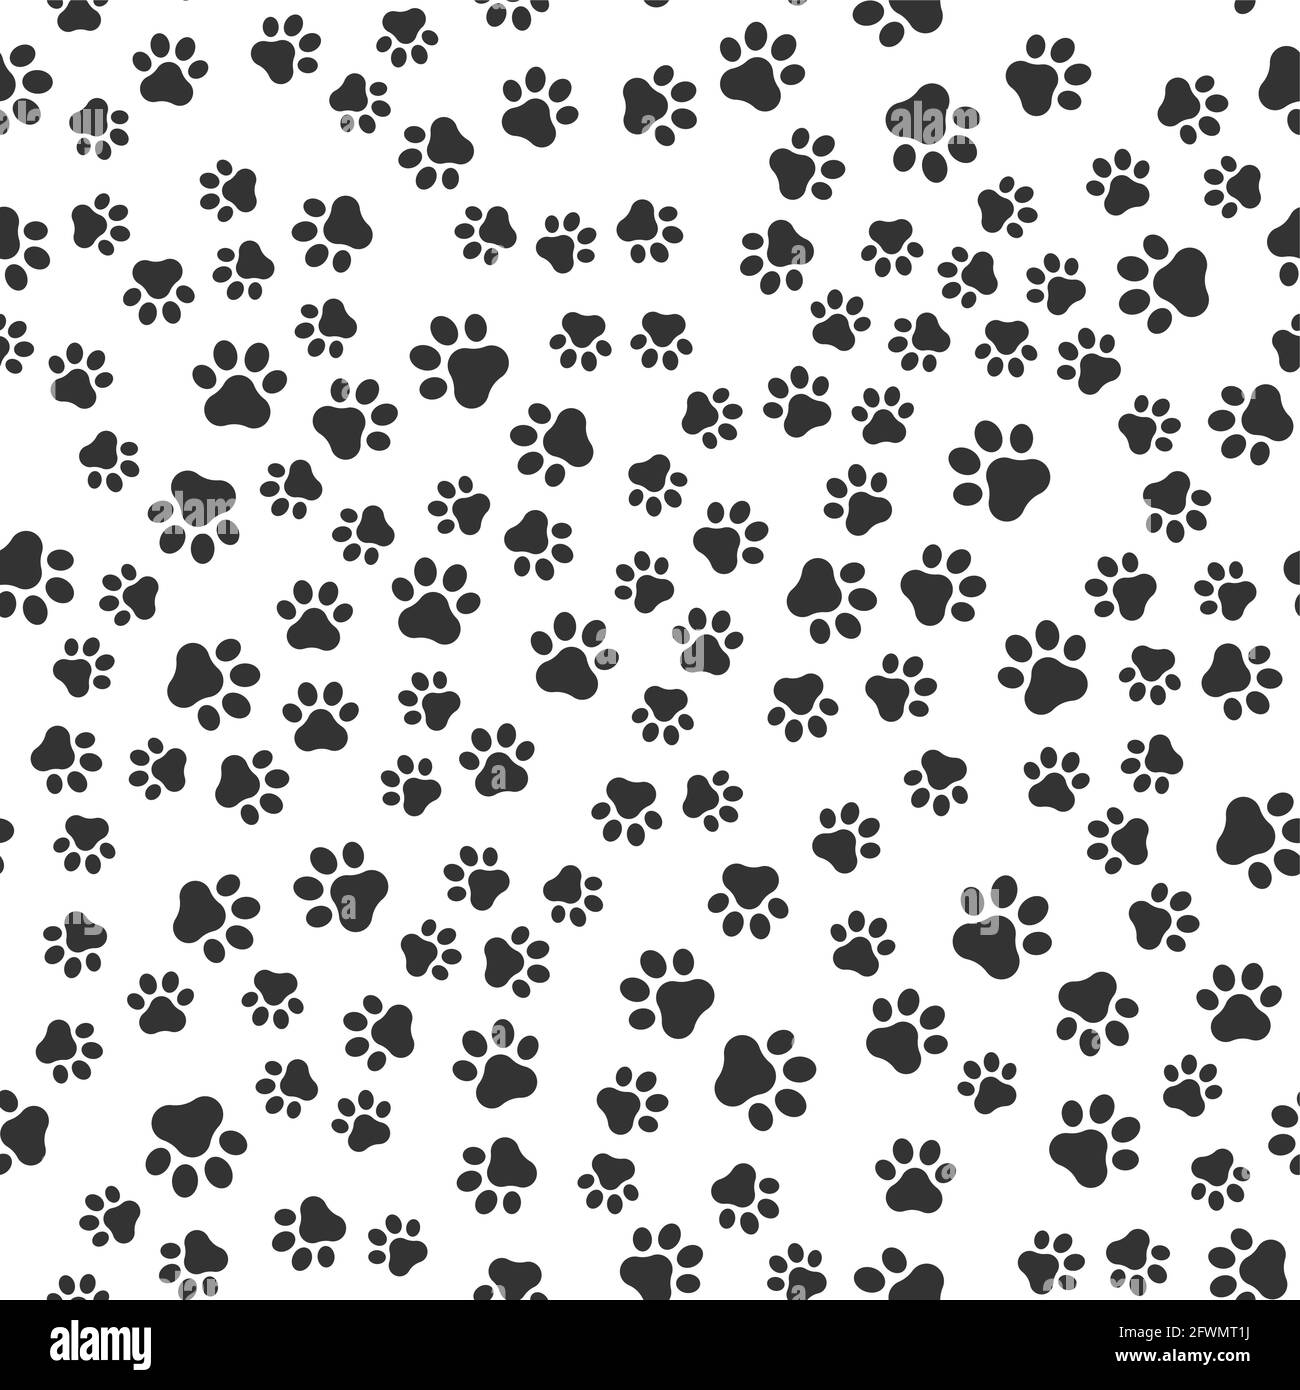 Cat Paws Wallpaper Legs Dog Paw Cat Background Kitten Flat Design  Prints Cartoon Cute Cat Foot Wallpaper Vector Illustration Ilustraciones  svg vectoriales clip art vectorizado libre de derechos Image 129400382